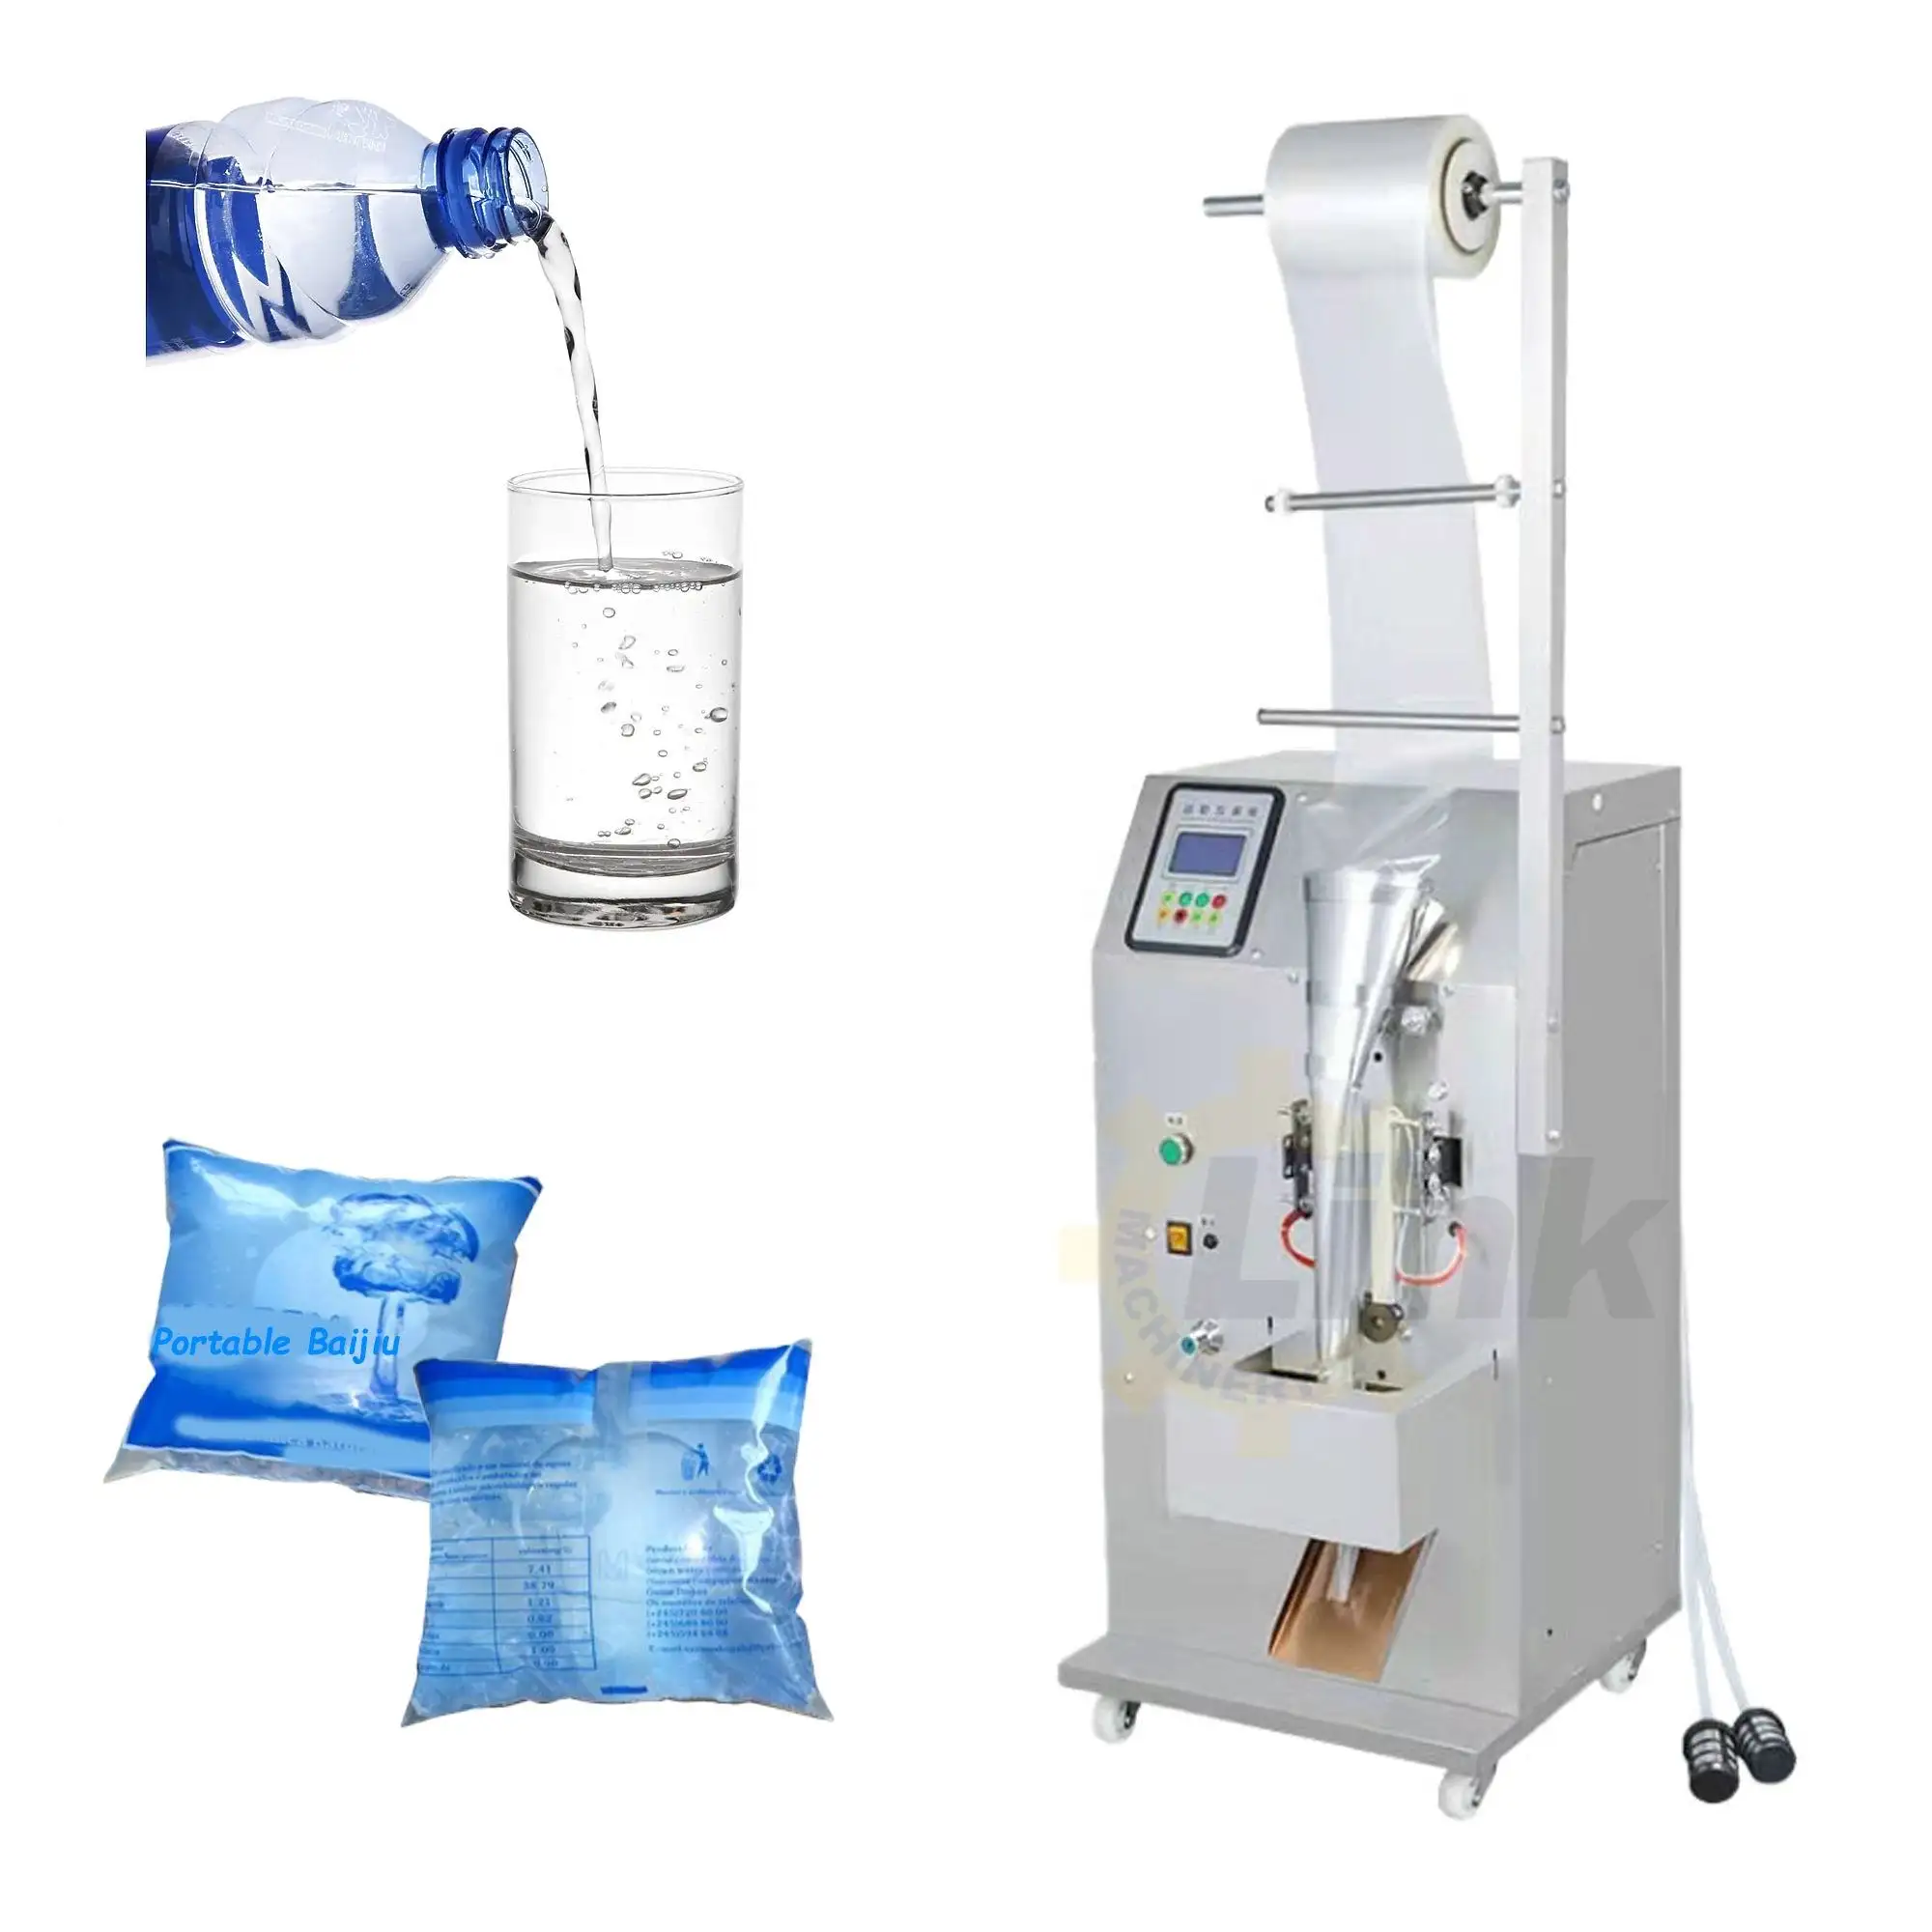 San sachet water bagging machine,water bag filling machines,sachet water bag printing machine